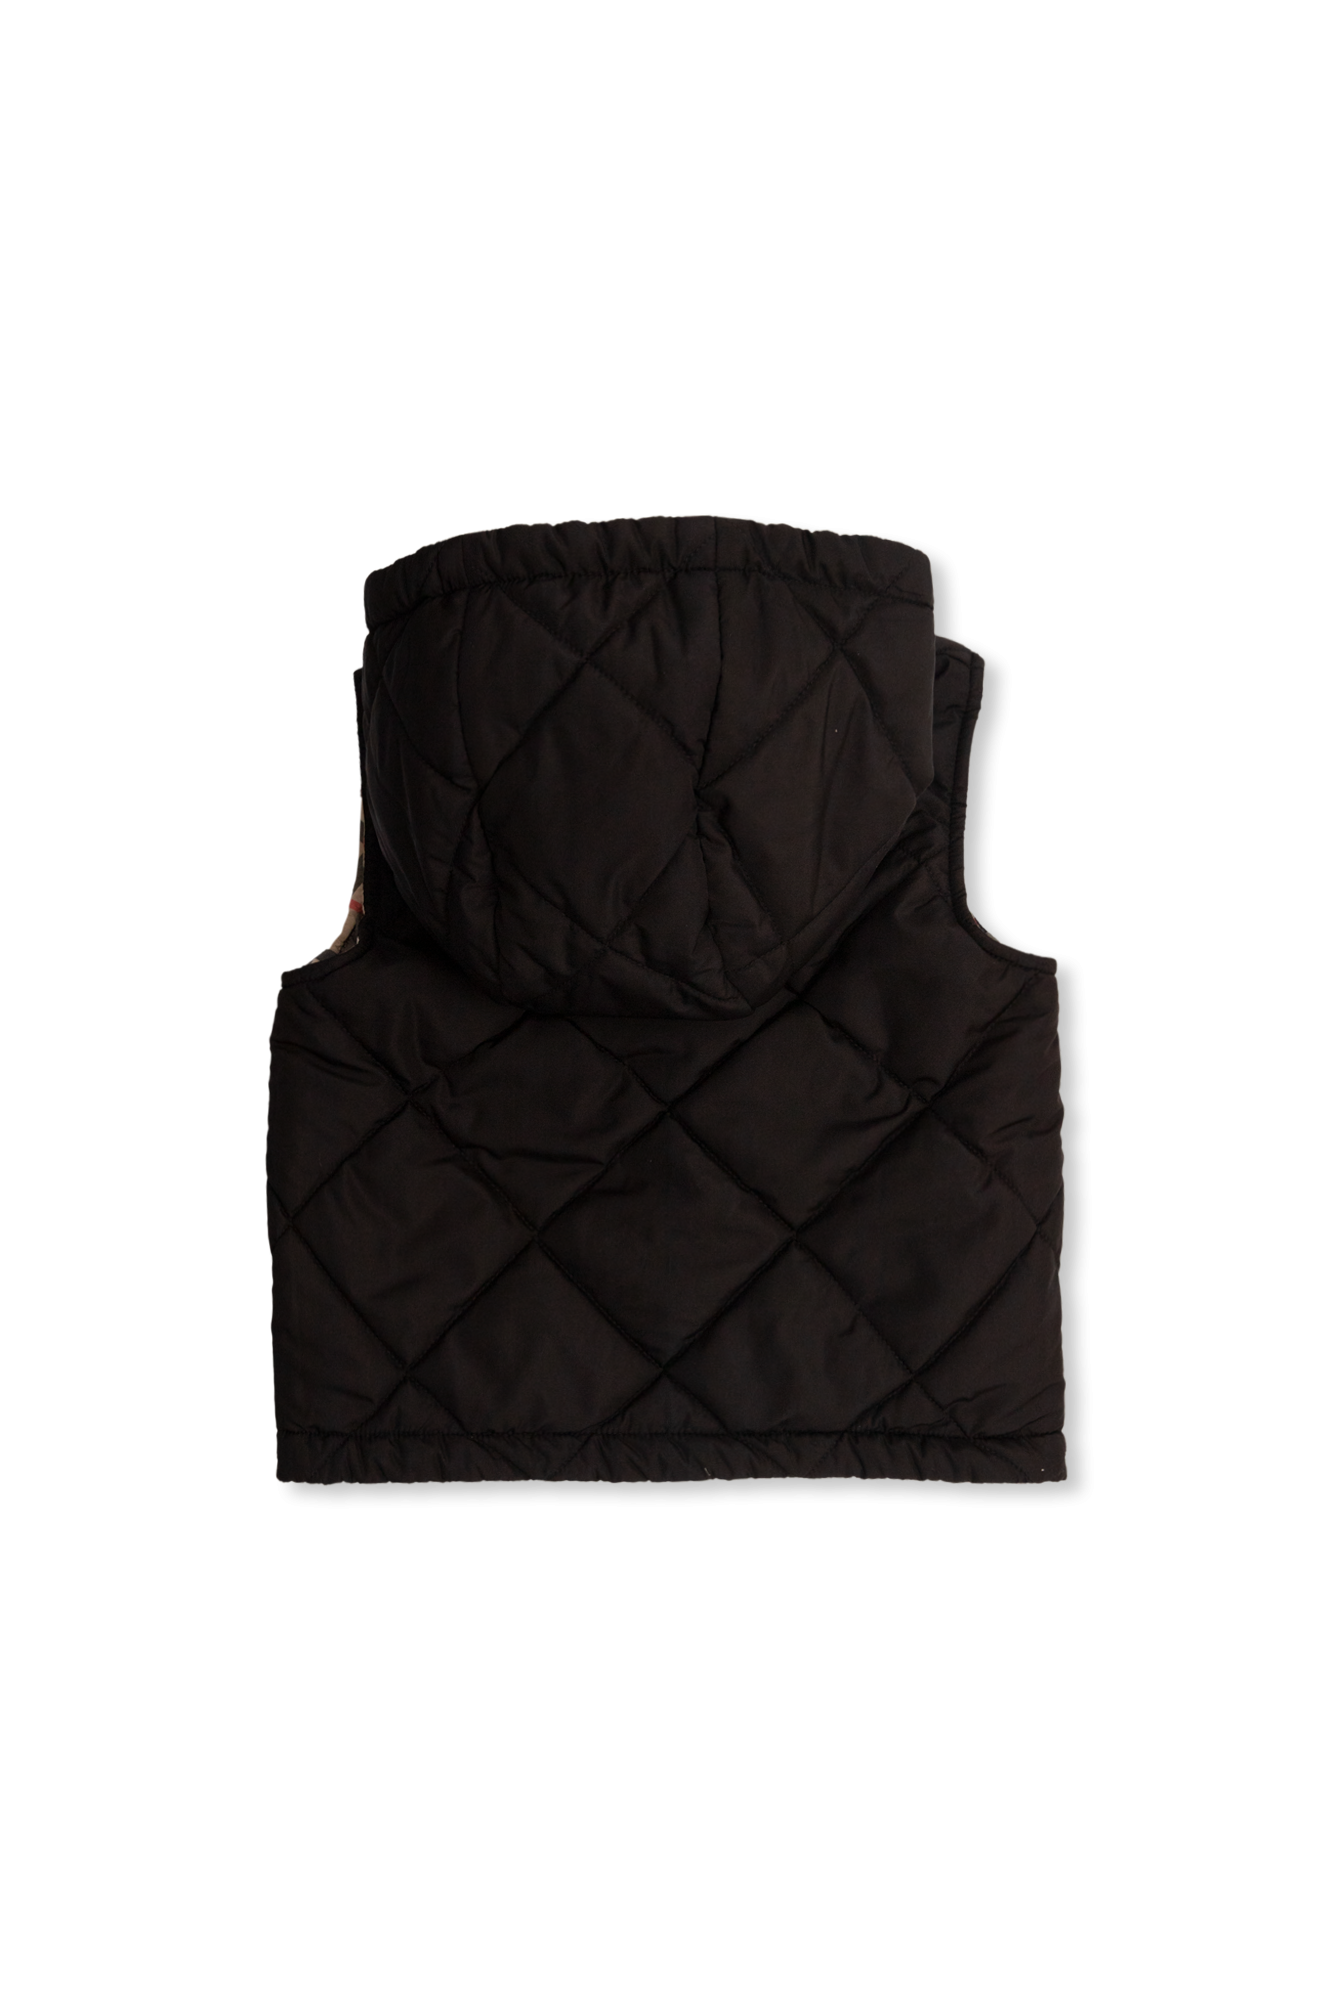 Burberry Kids Reversible vest with hood